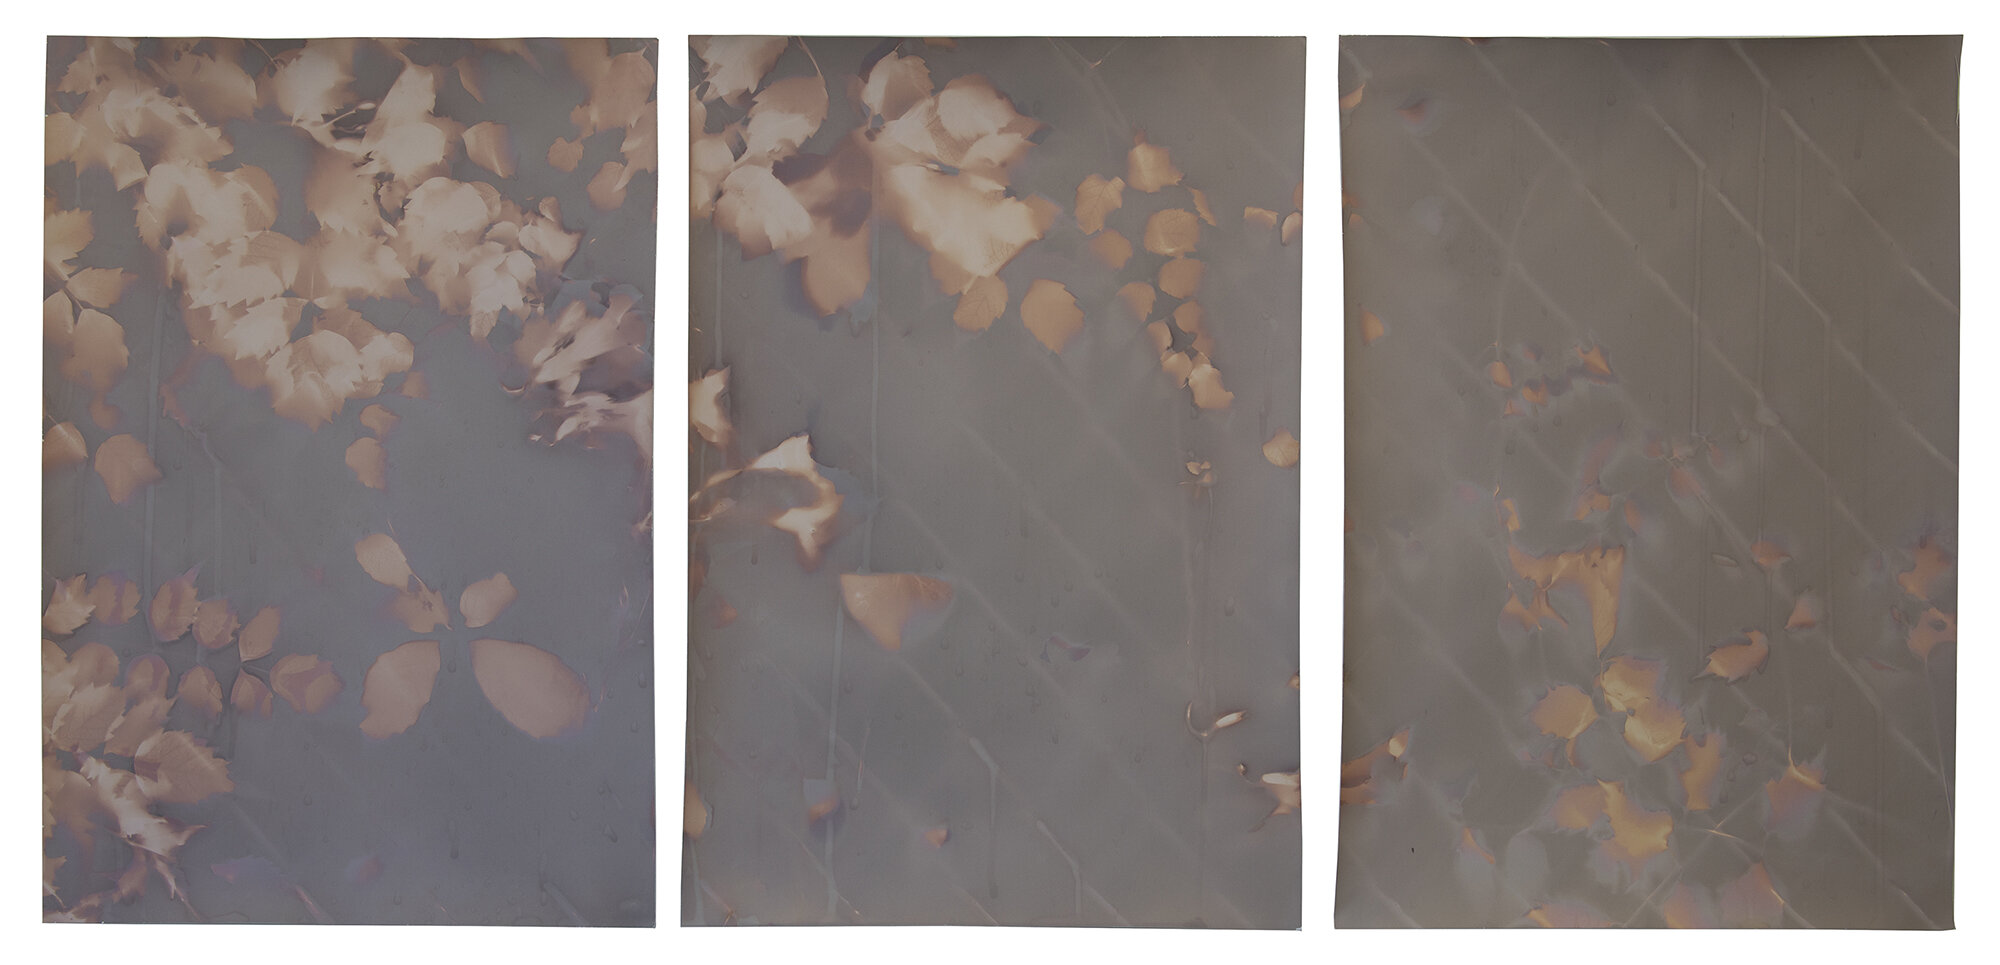  red hook triptych #10 king st  20” x 42”  lumen prints  